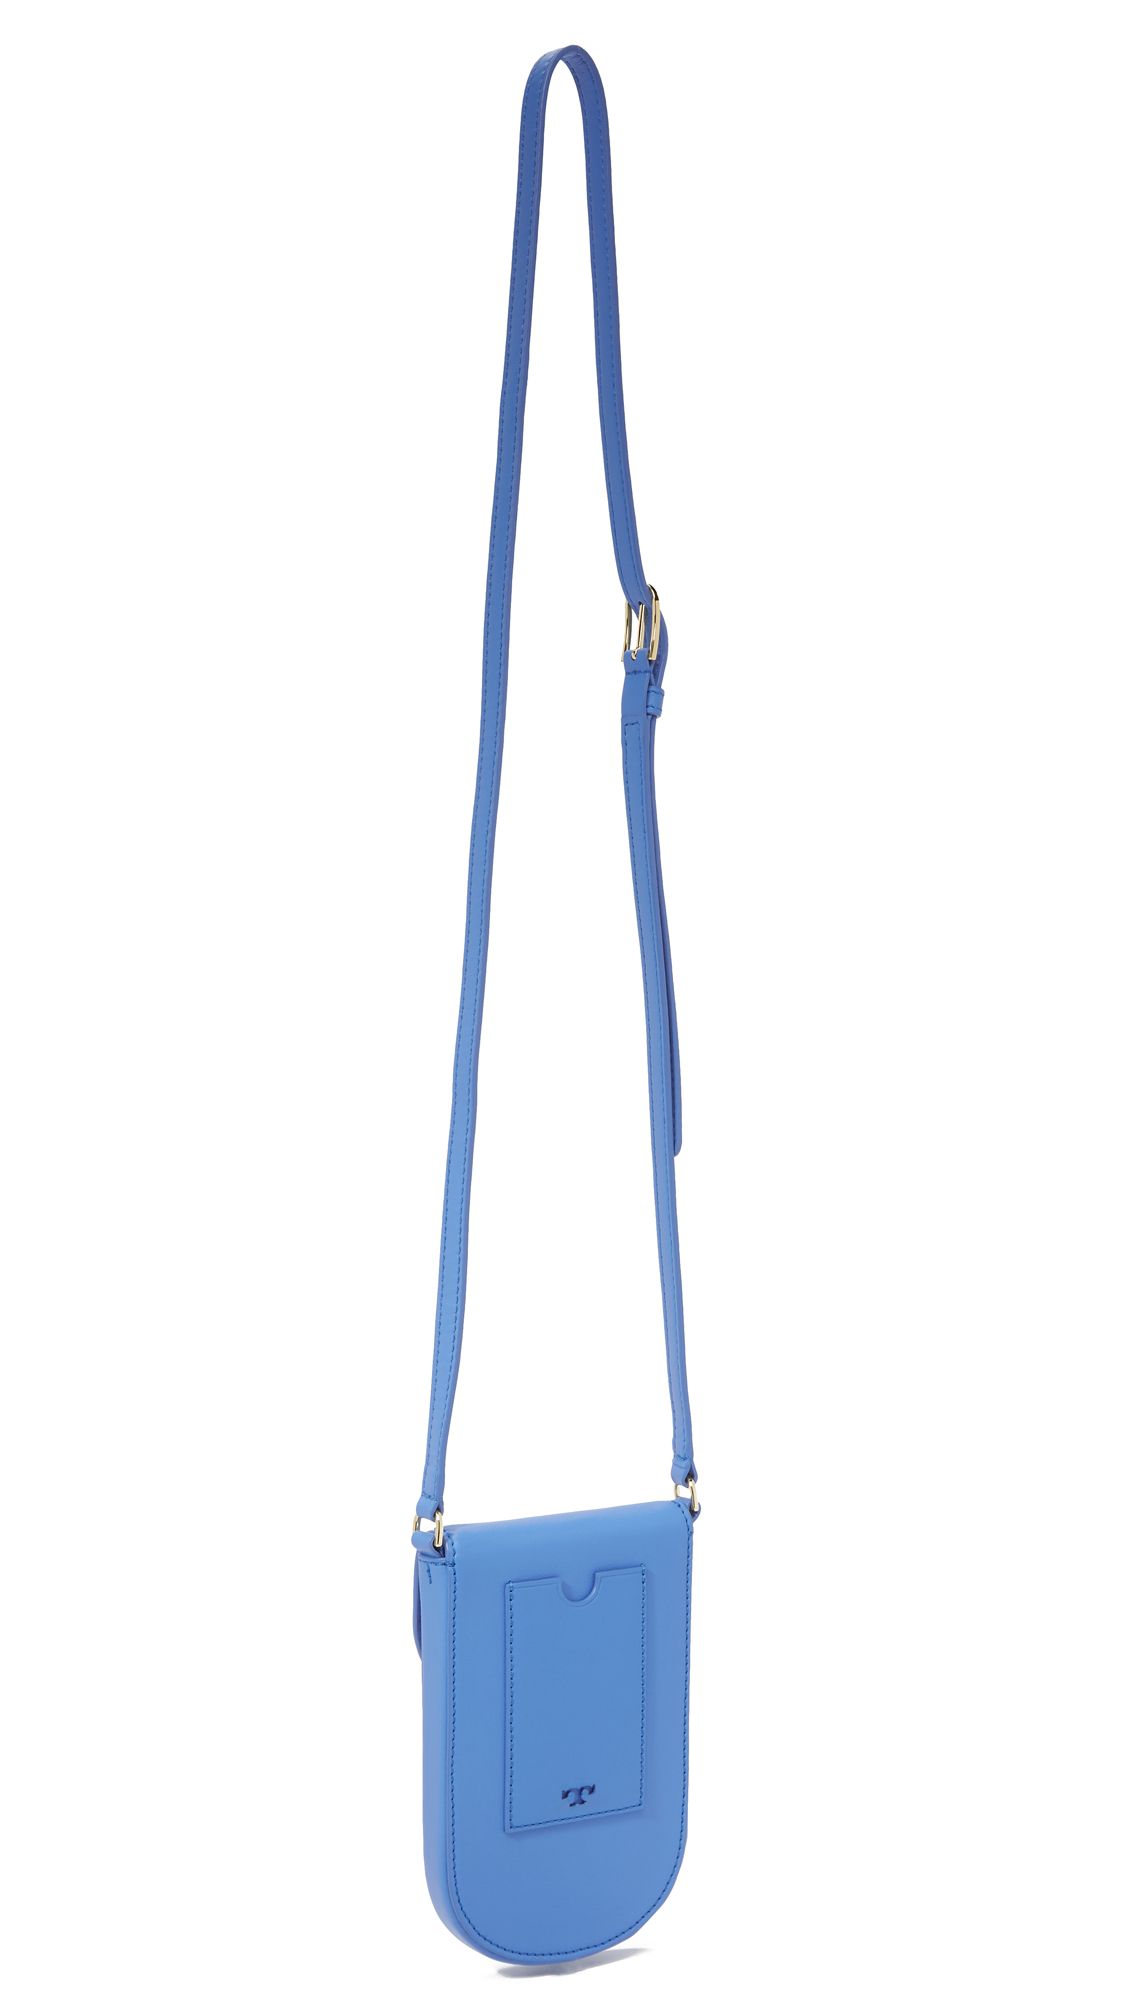 Lyst - Tory Burch Novelty Mini Phone Cross Body Bag in Blue